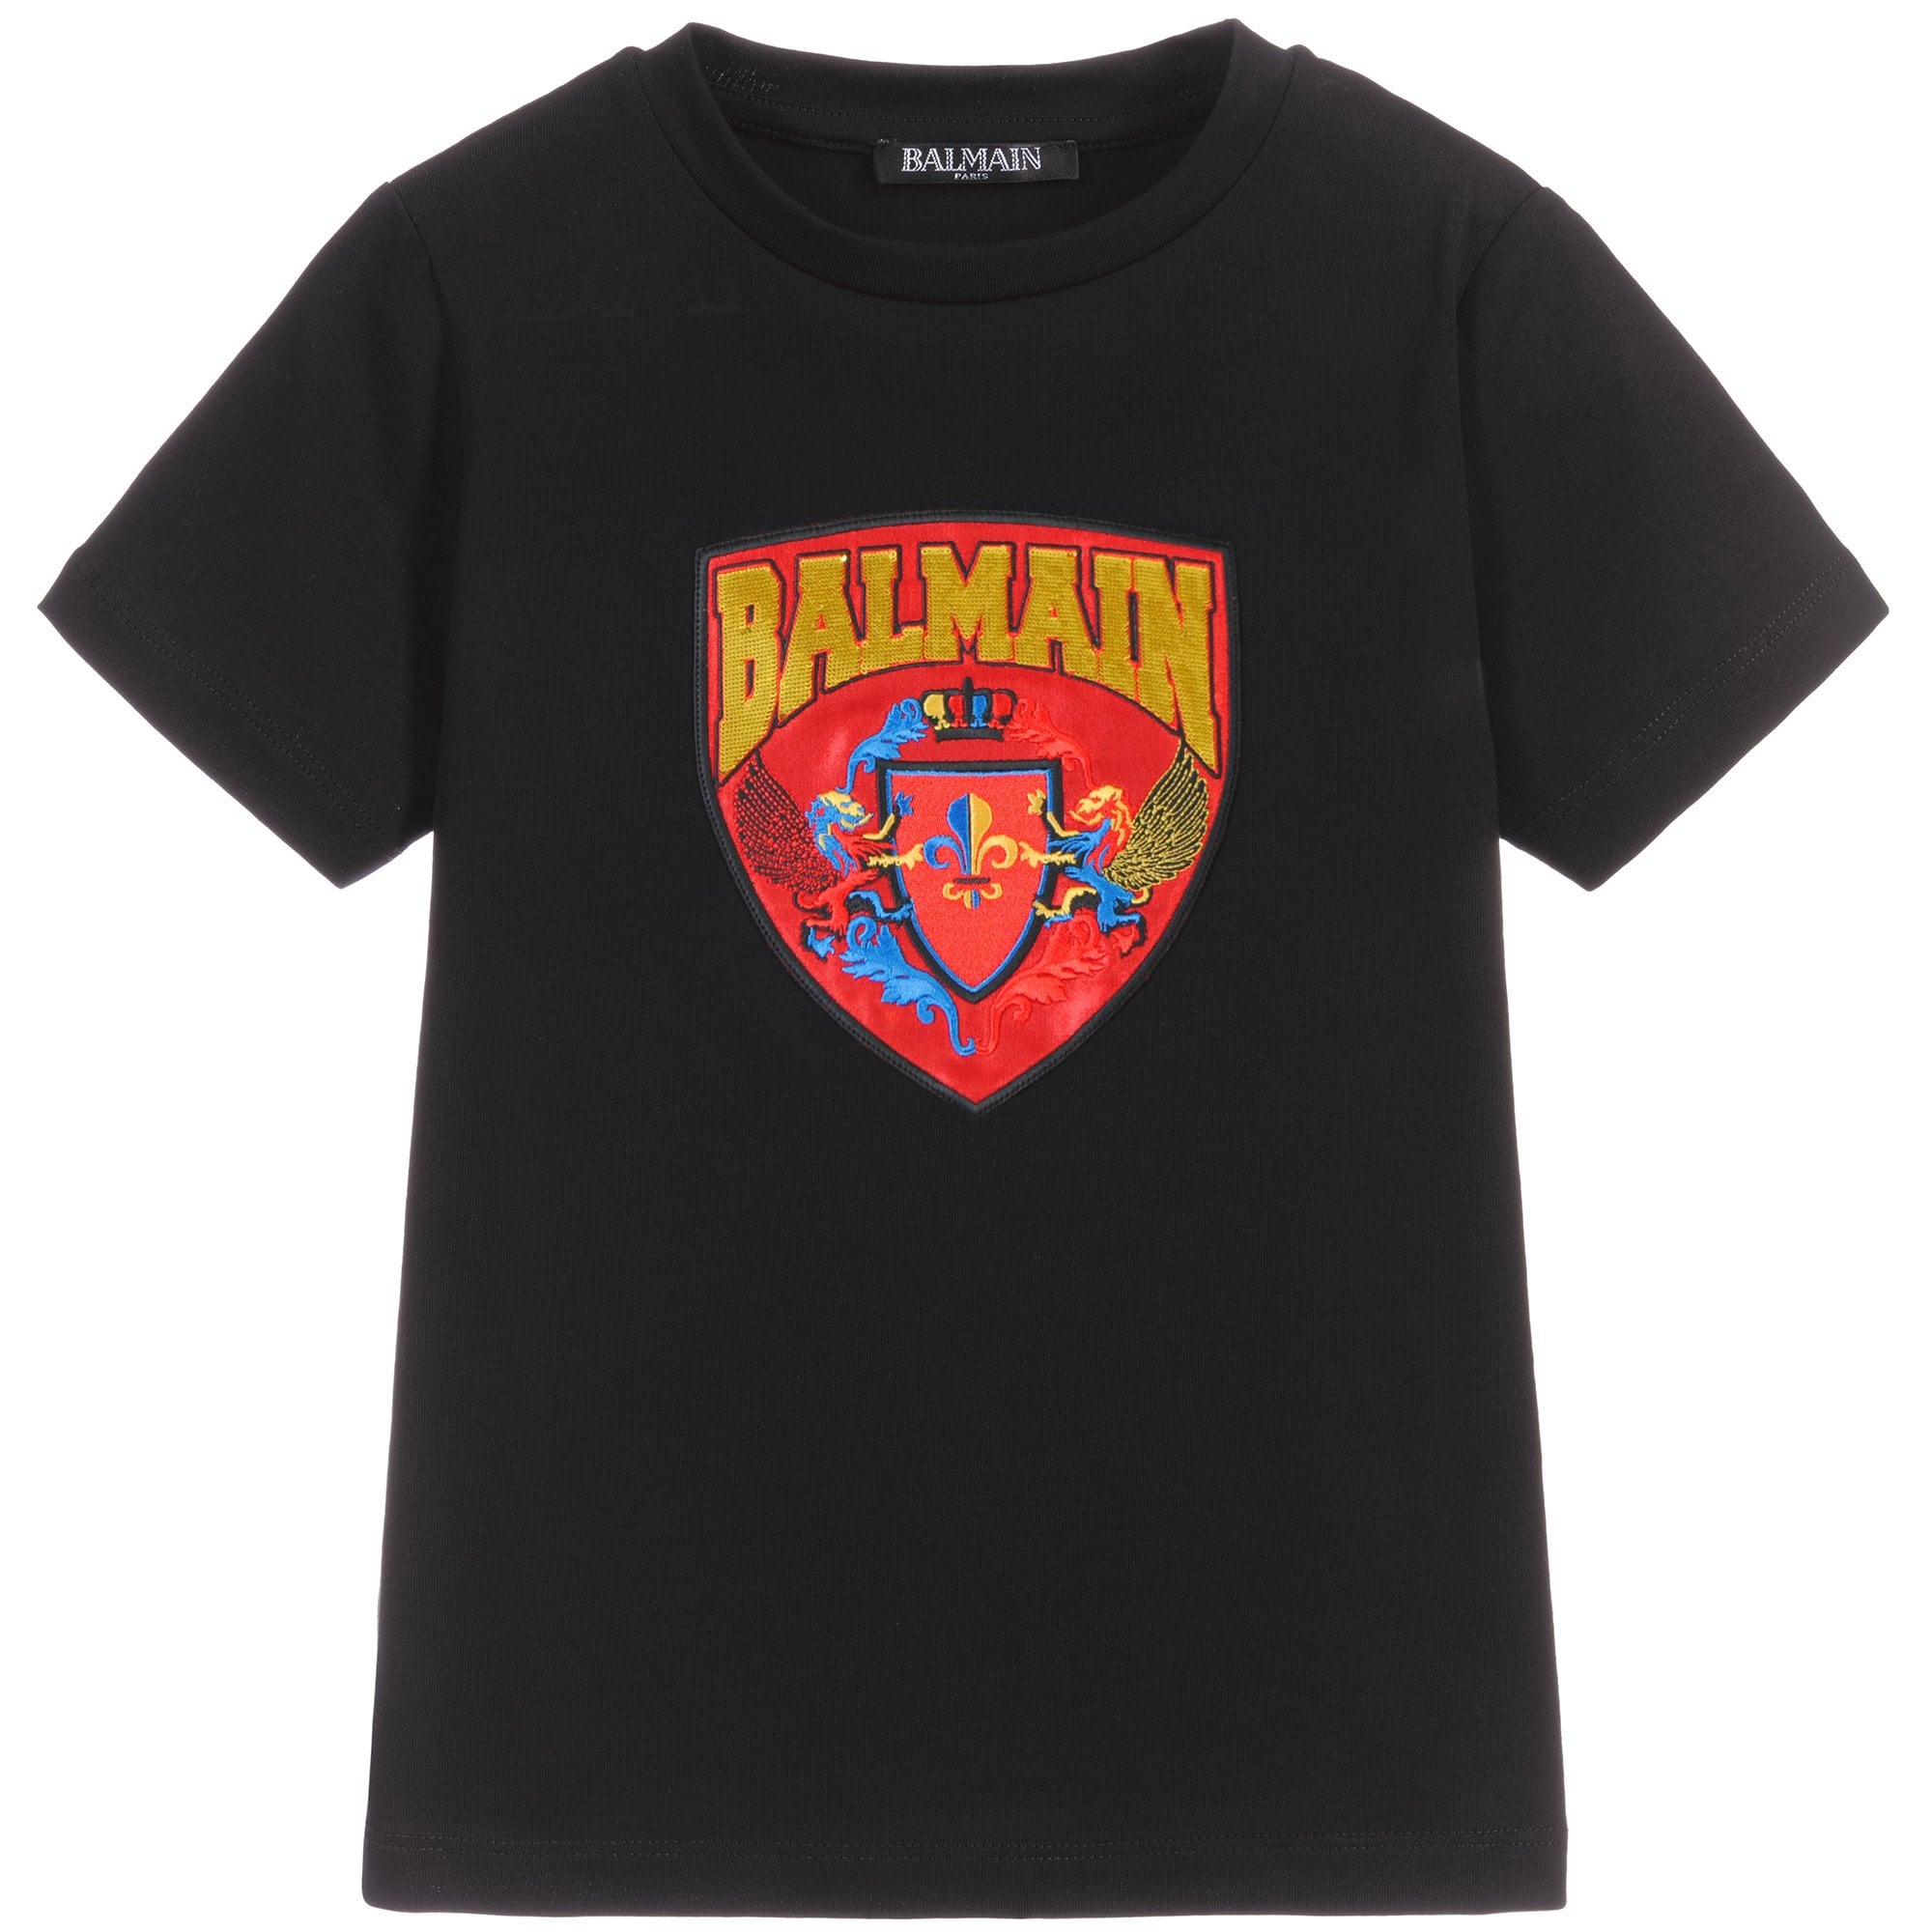 Balmain Boys Graphic Print T-Shirt Black - Balmain KidsT-shirts